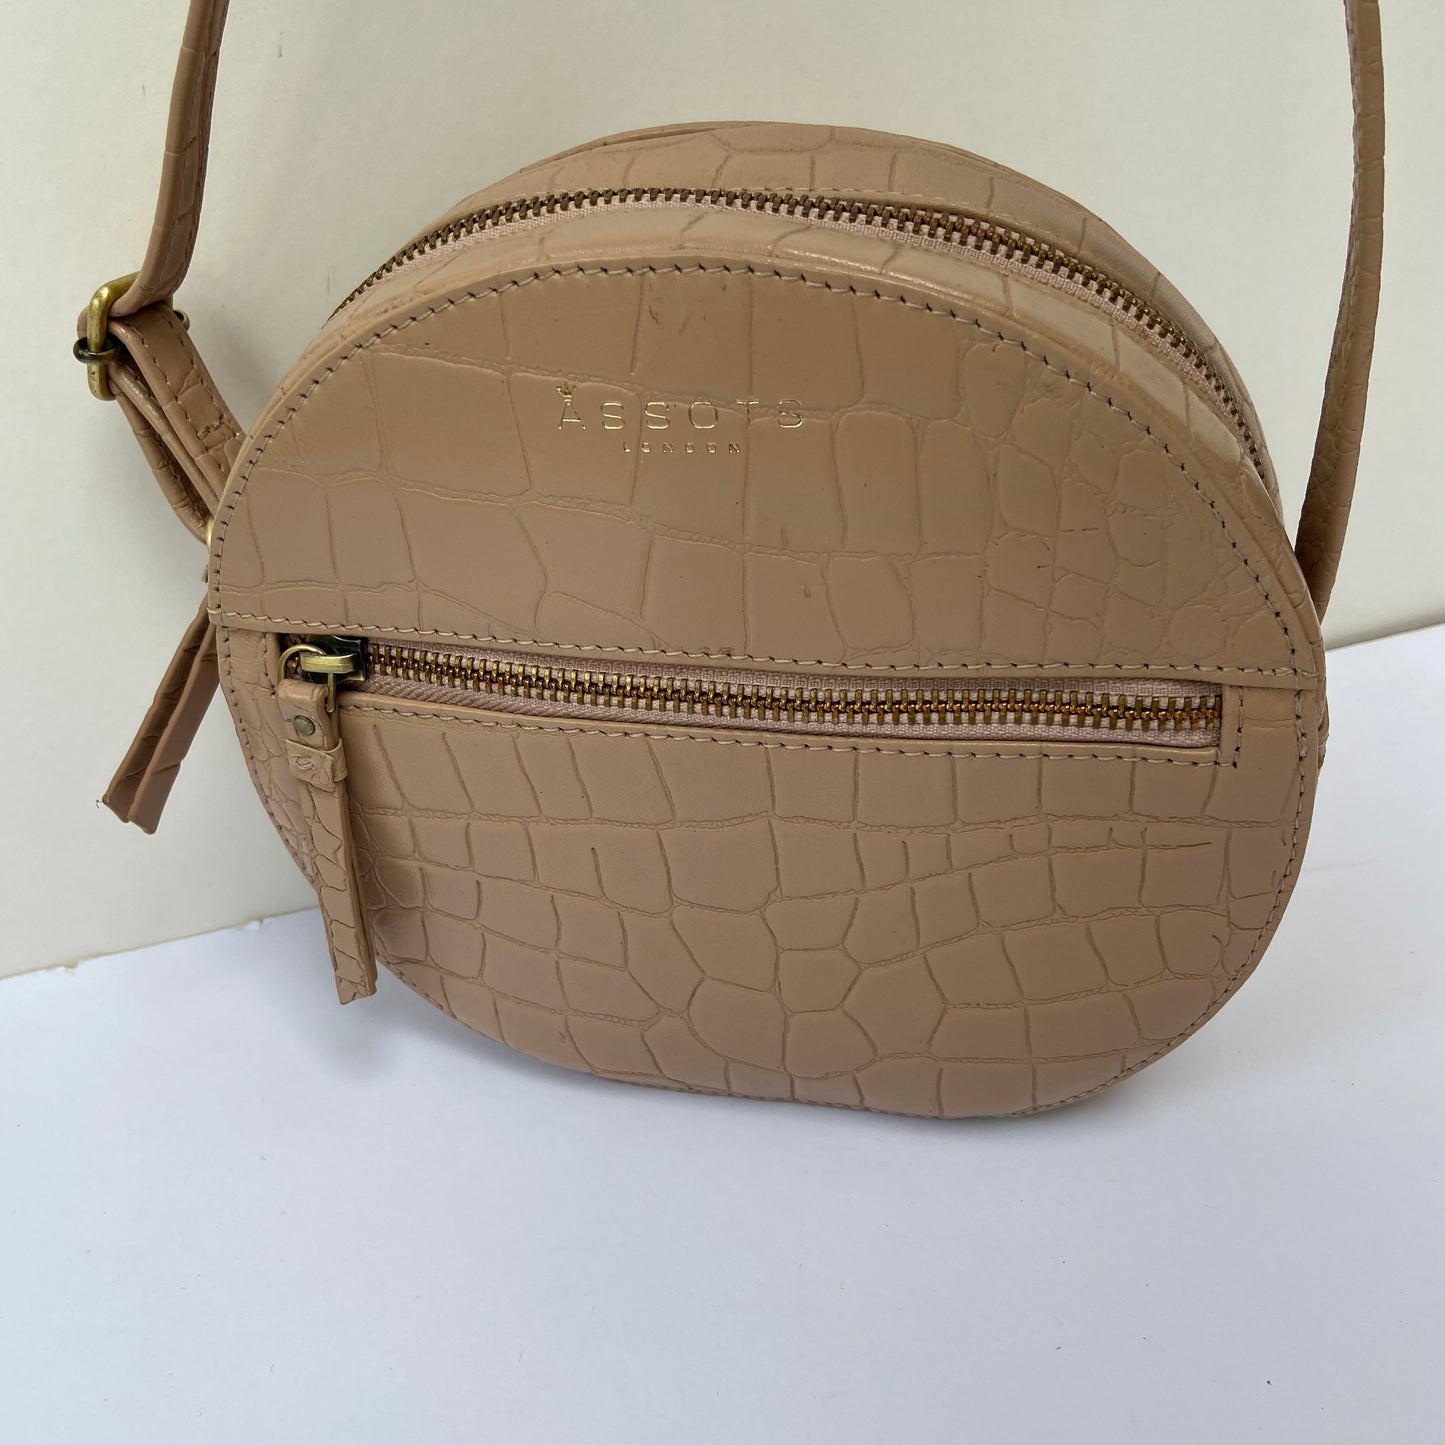 Round Leather Handbags - SAMPLES